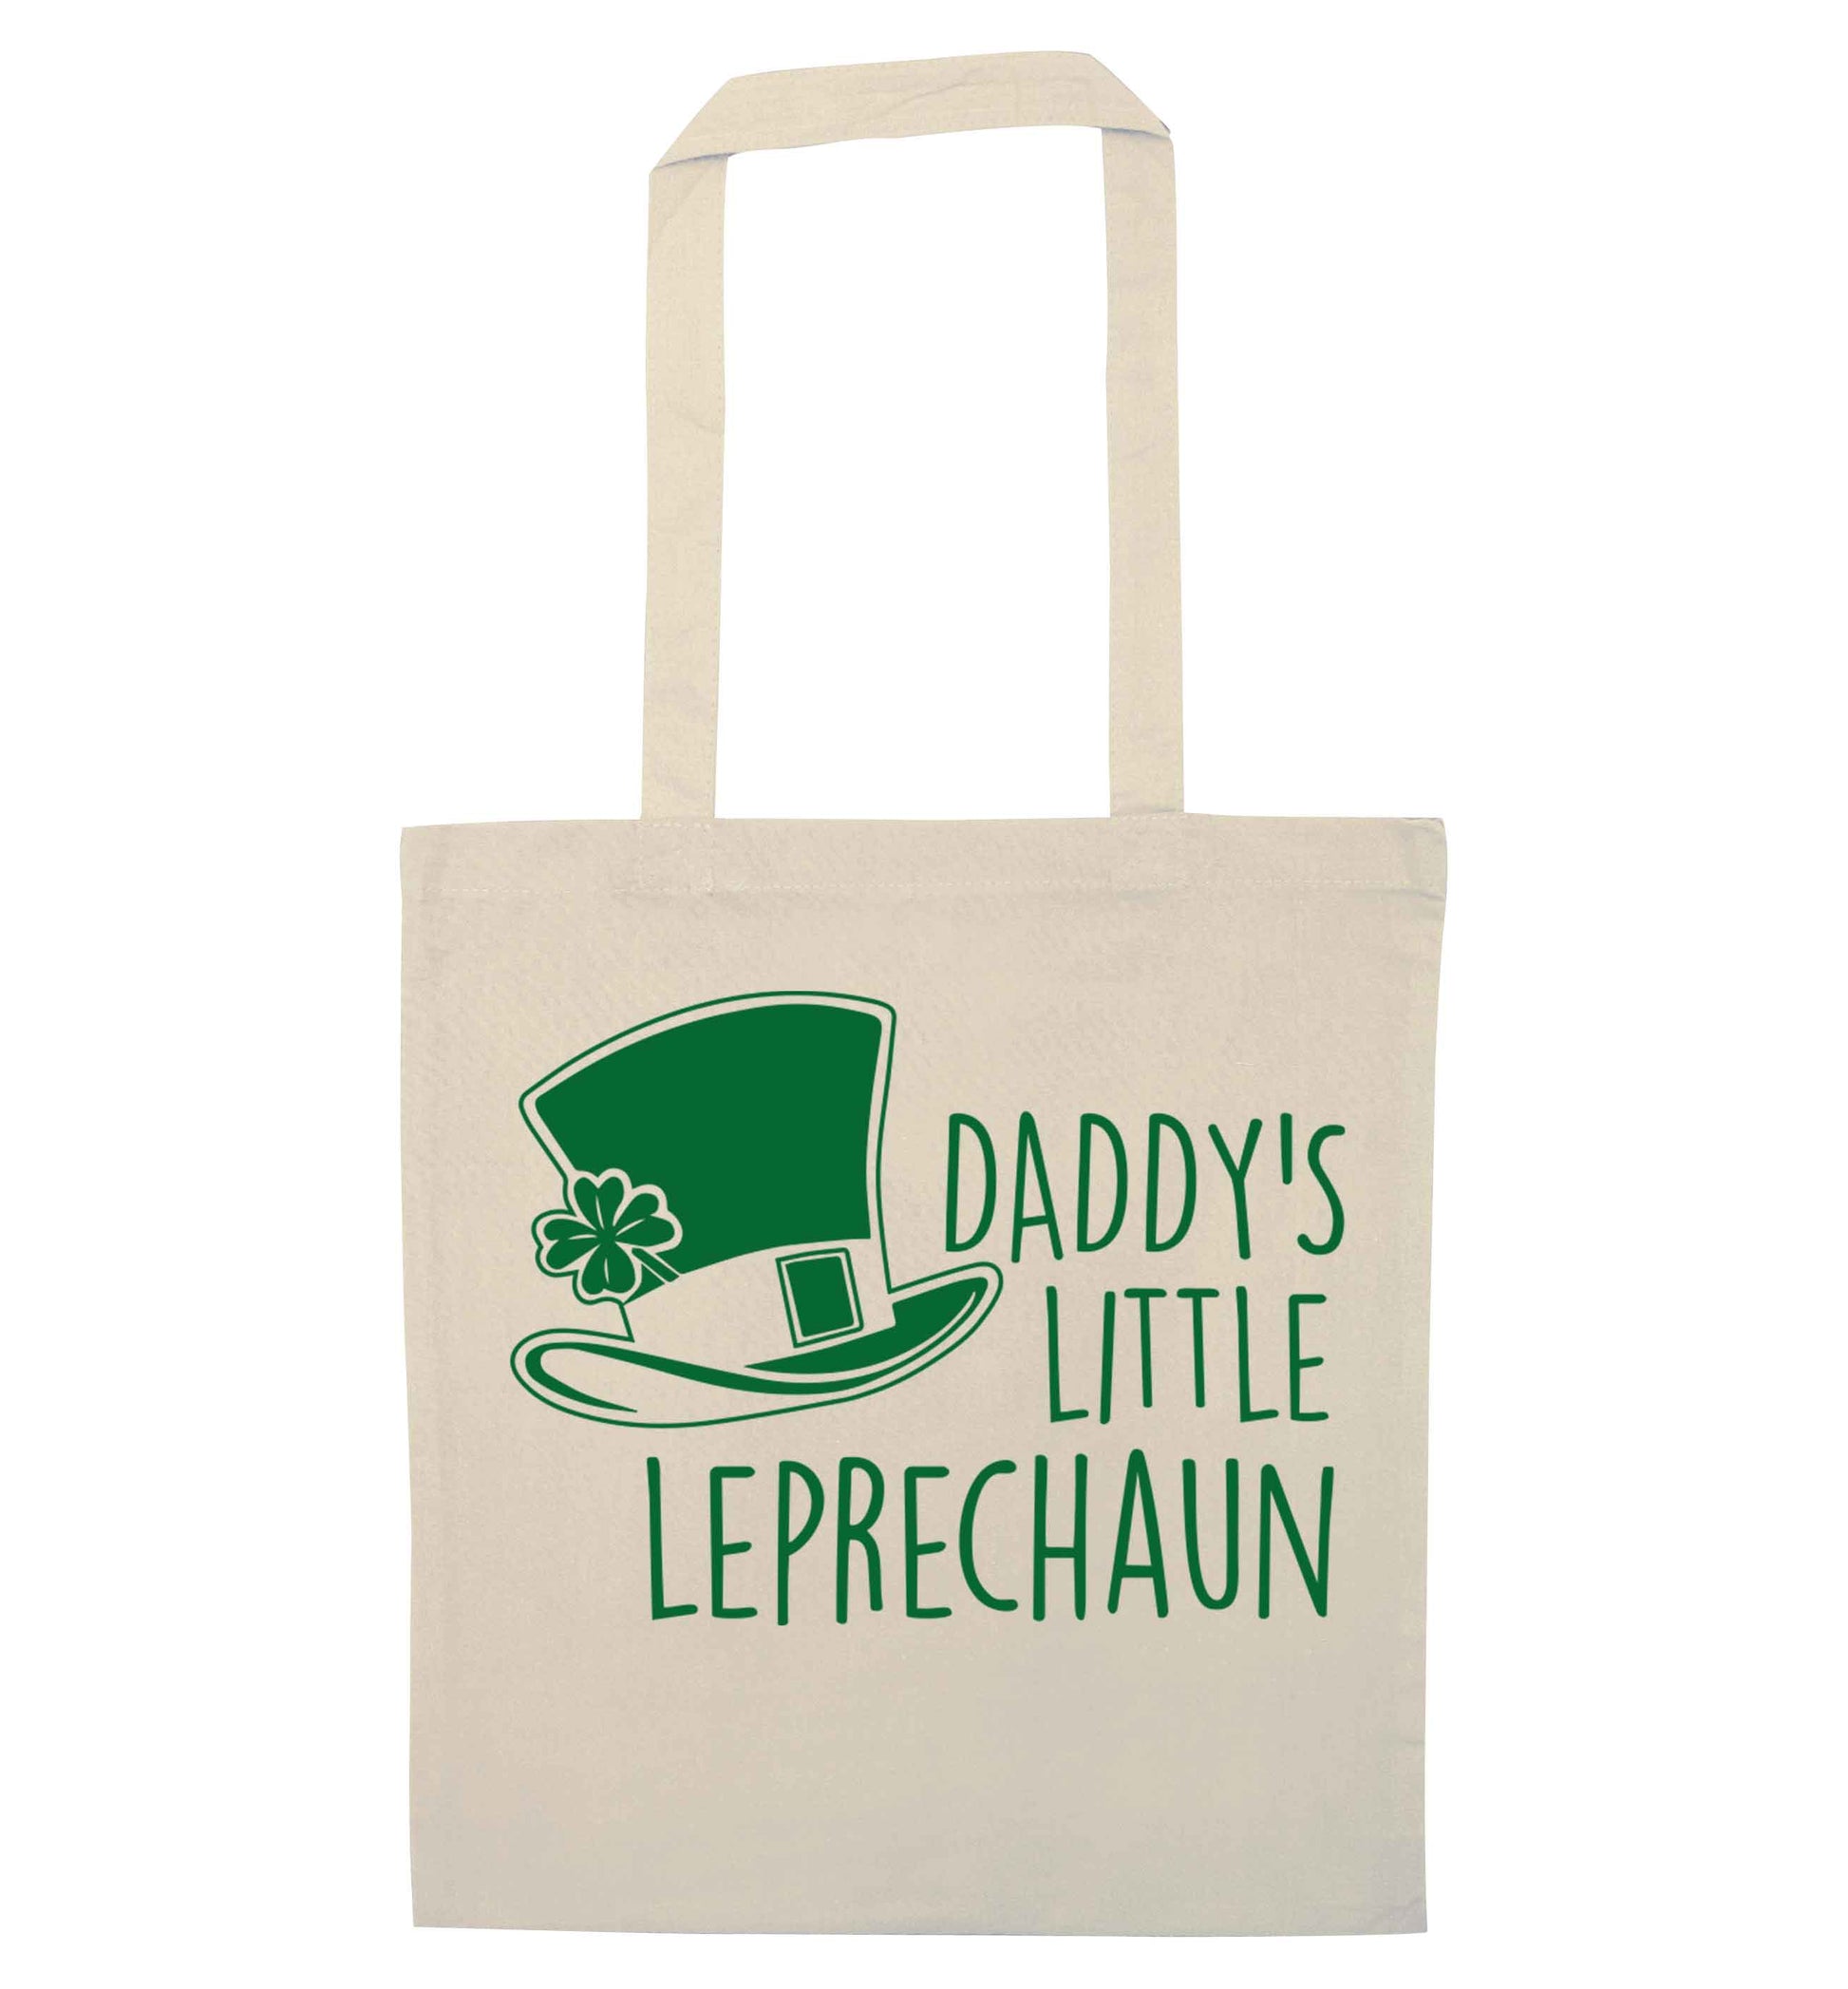 Daddy's little leprechaun natural tote bag